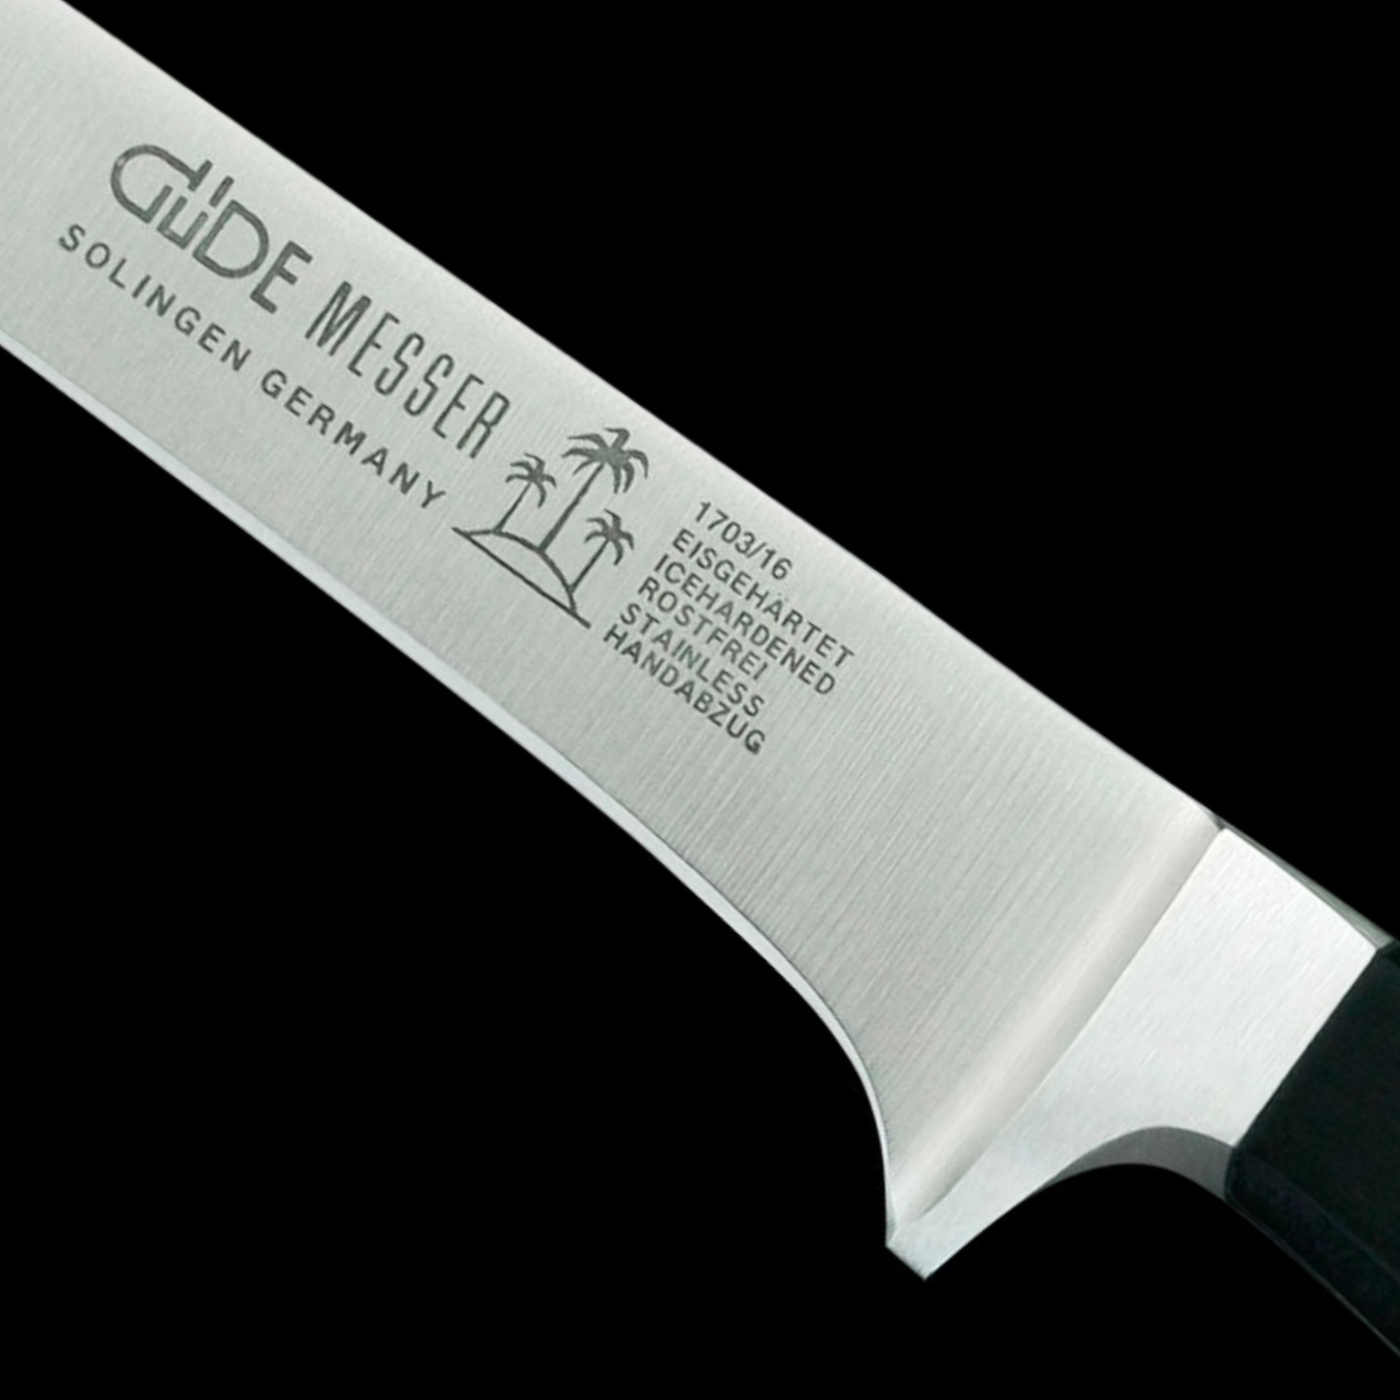 Gude Alpha Series Boning Knife With Black Hostaform Handle, 6.5-in. - Kitchen Universe